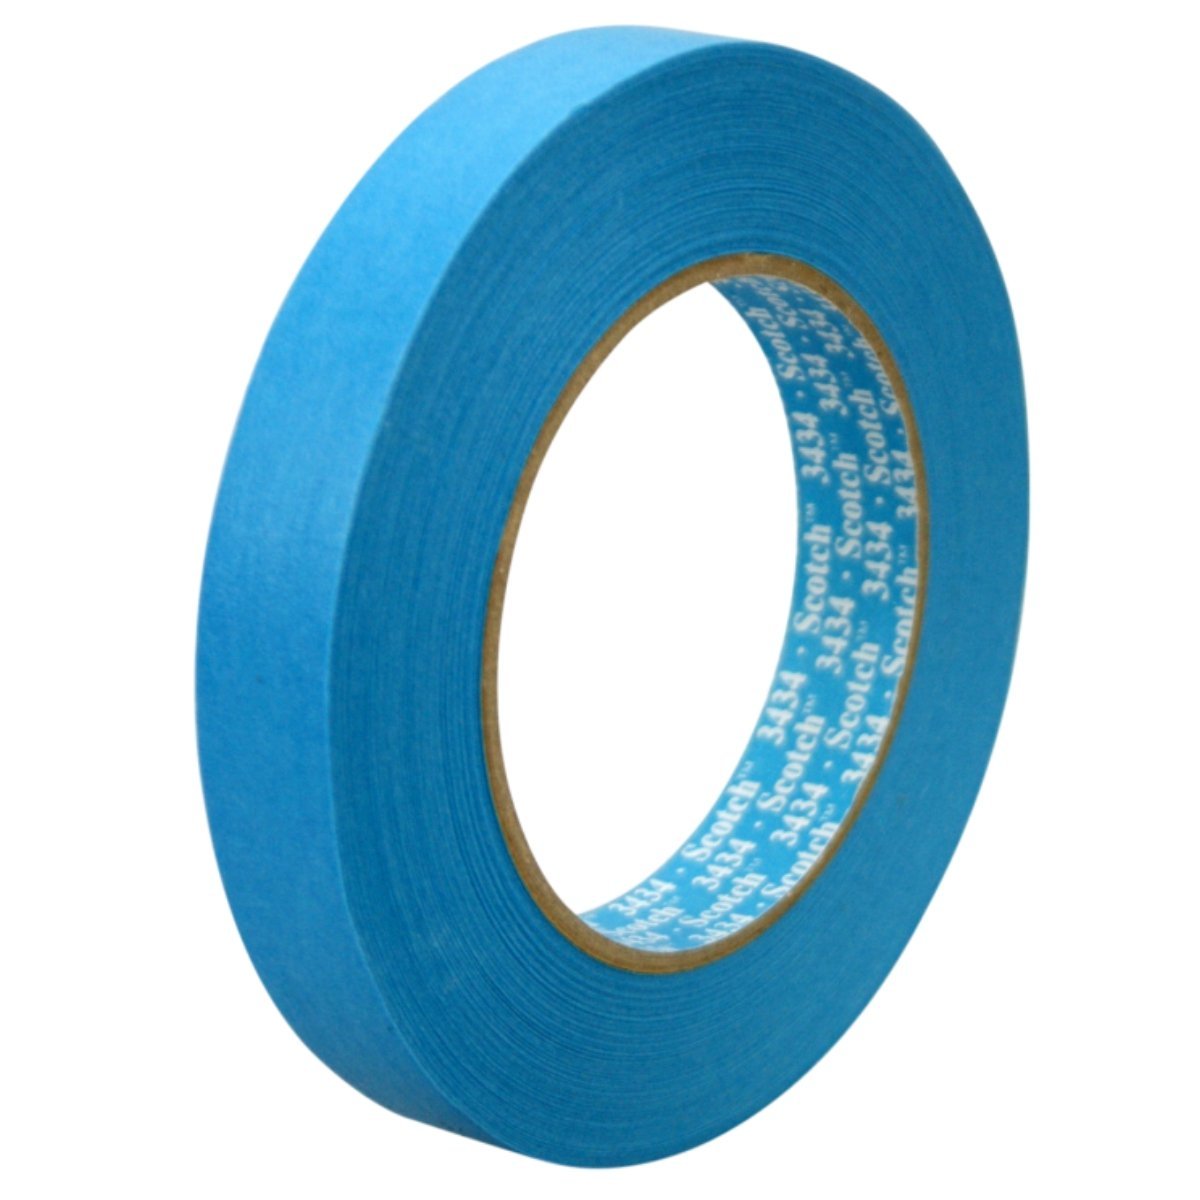 Vib-314-0018 2 In. Blue High Performance Masking Tape